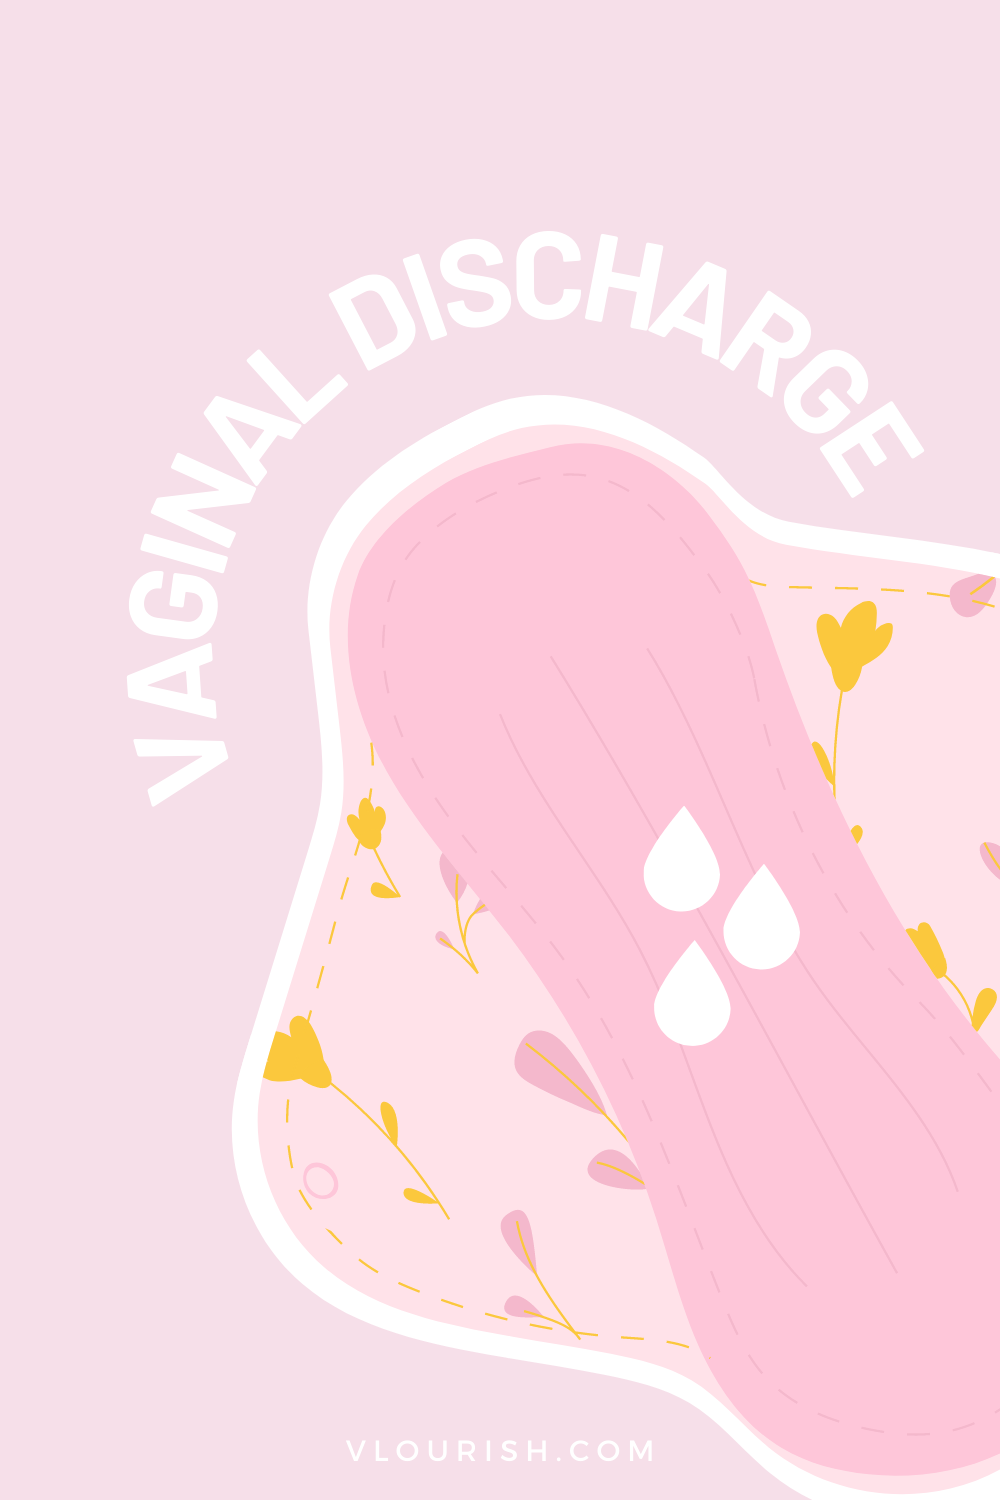 vaginal mucus